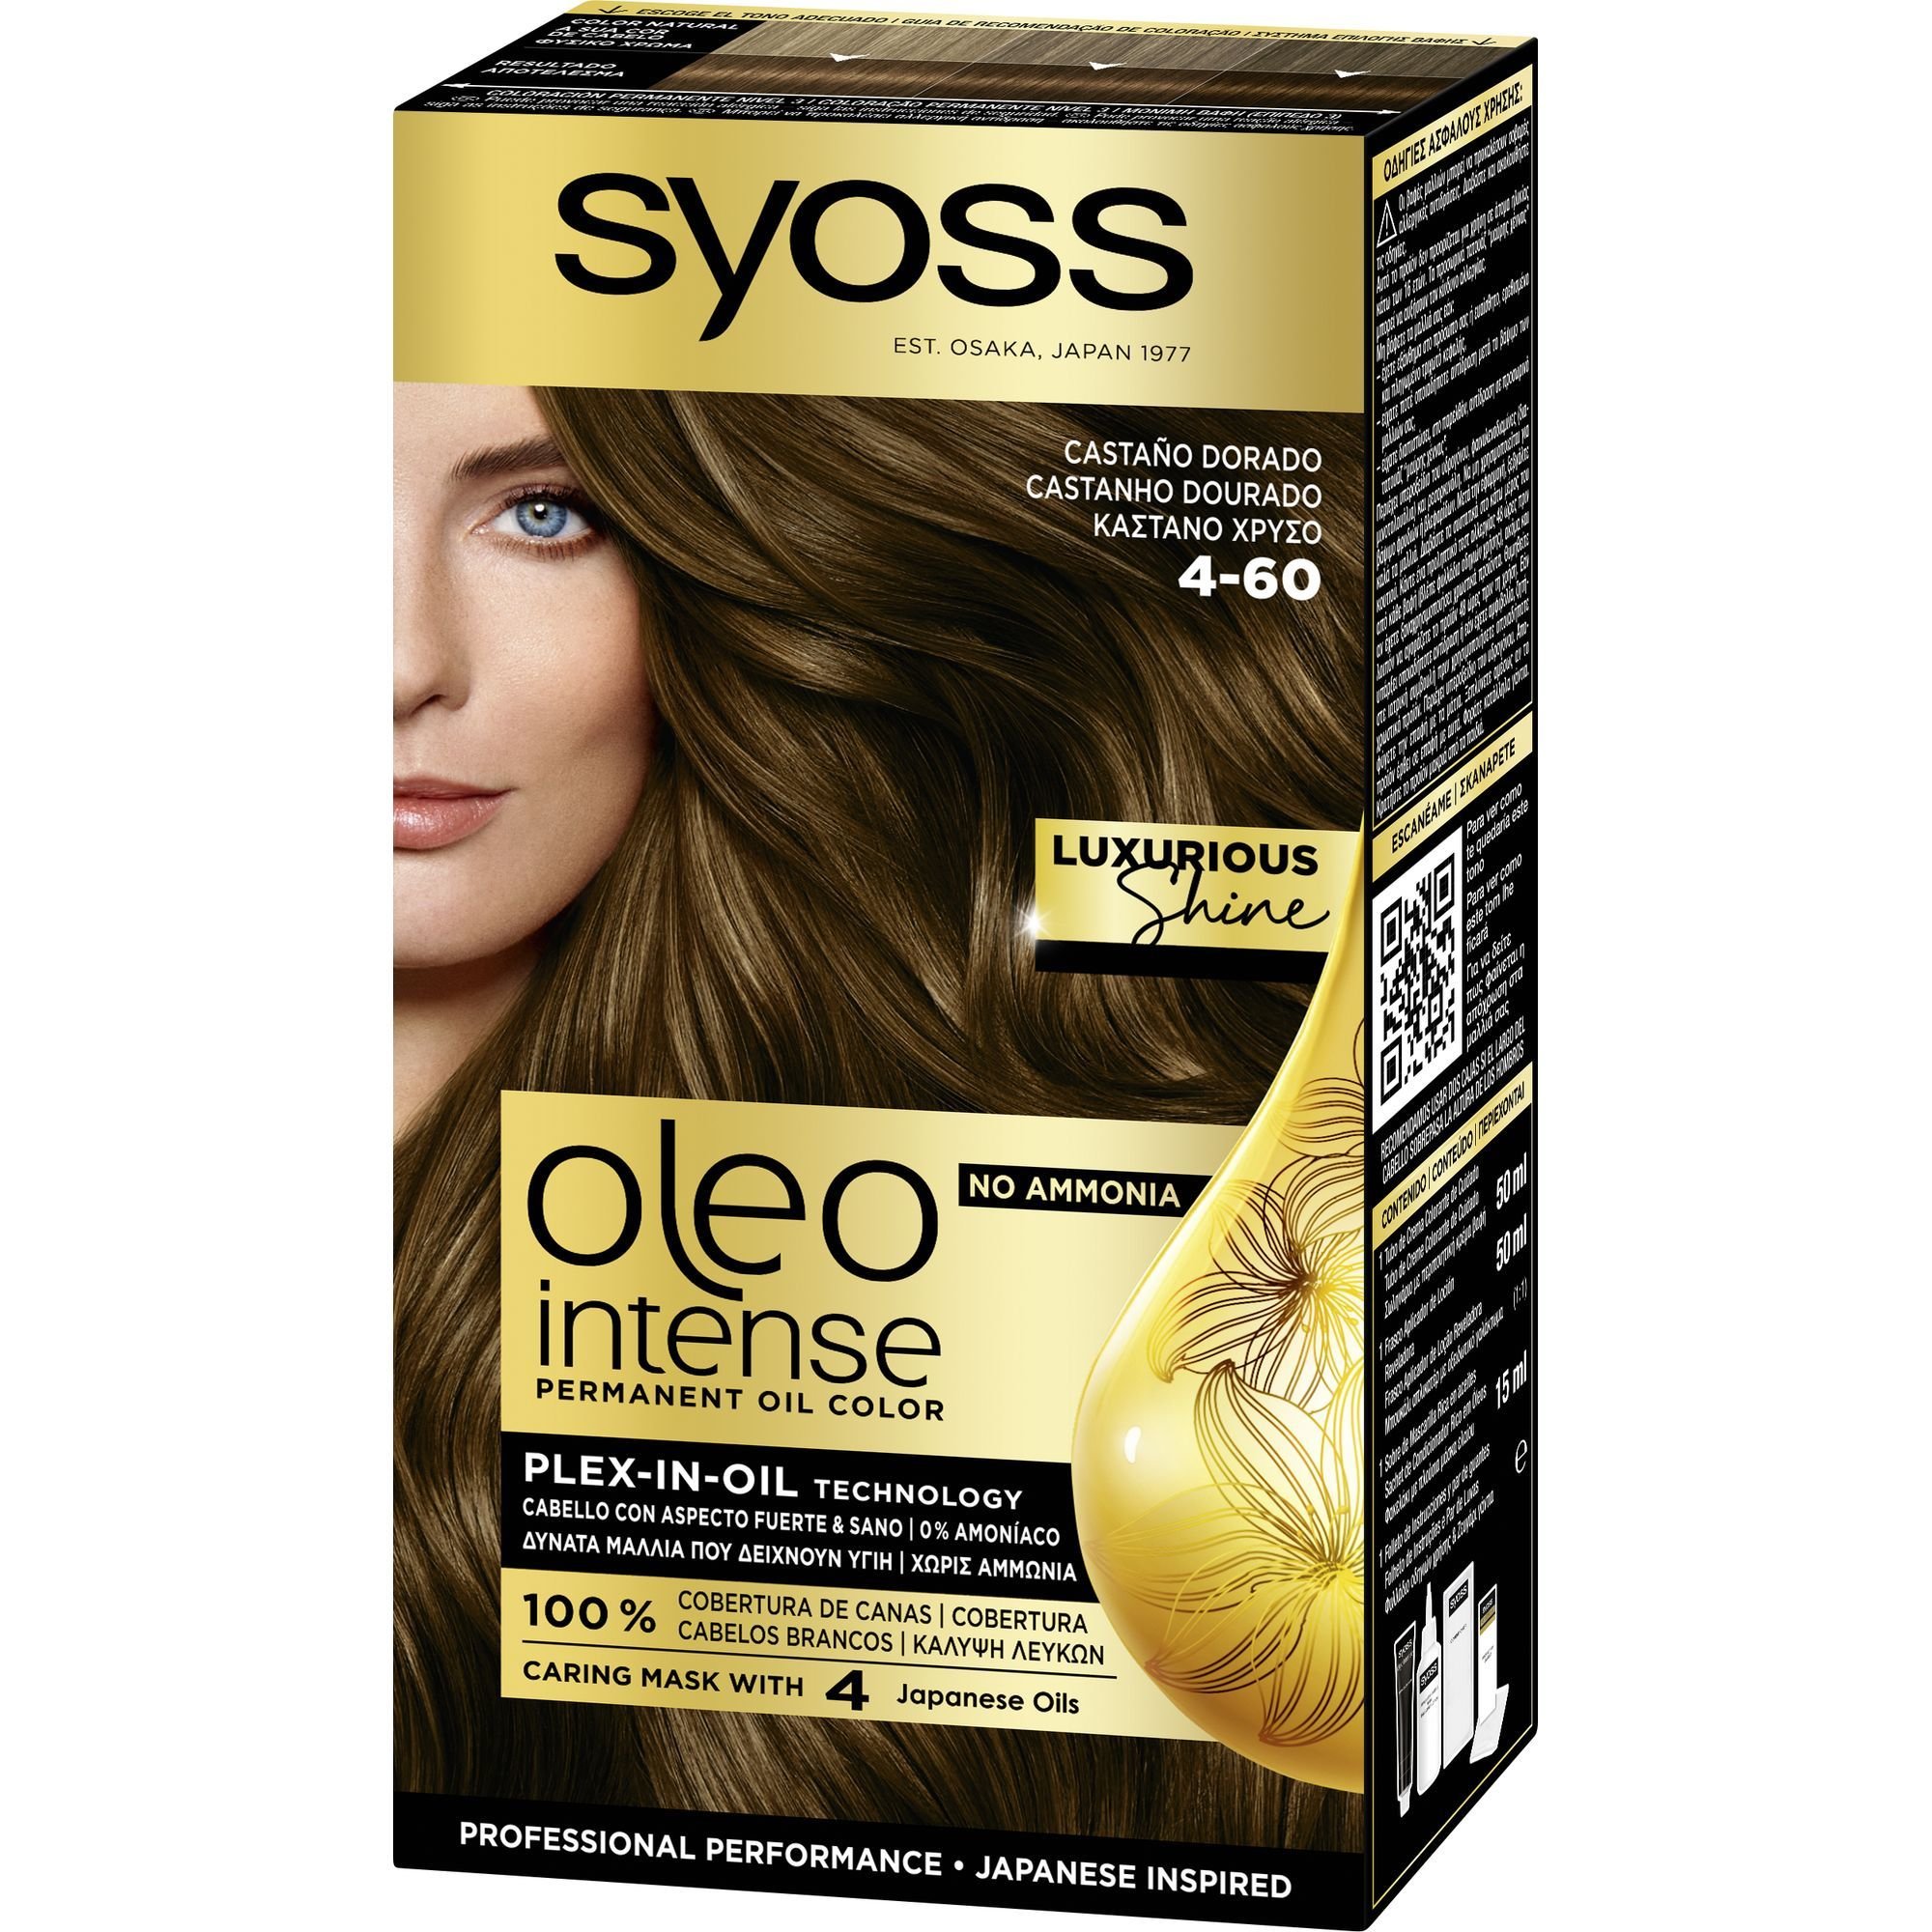 Syoss Syoss Oleo Intense Permanent Oil Hair Color Kit Επαγγελματική Μόνιμη Βαφή Μαλλιών για Εξαιρετική Κάλυψη & Έντονο Χρώμα που Διαρκεί, Χωρίς Αμμωνία 1 Τεμάχιο - 4-60 Καστανό Χρυσό